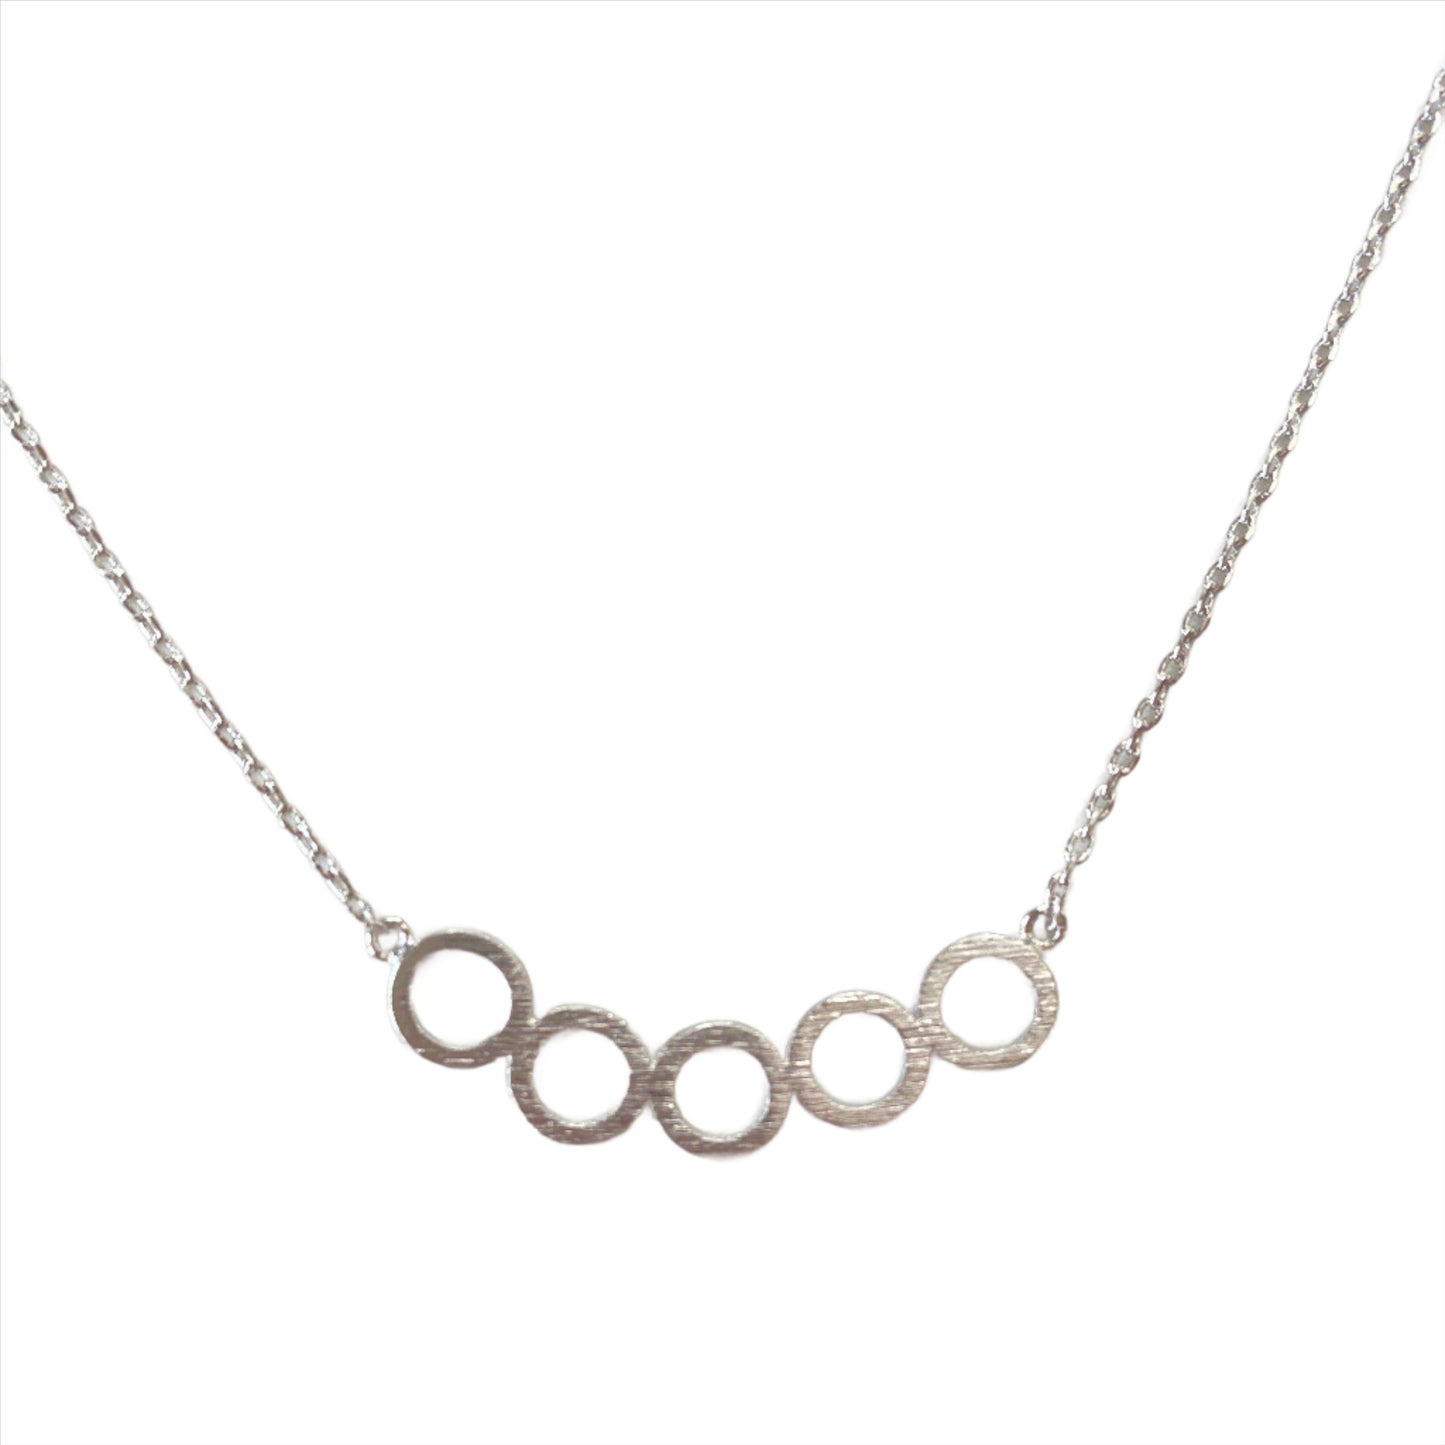 5 Circles Necklace